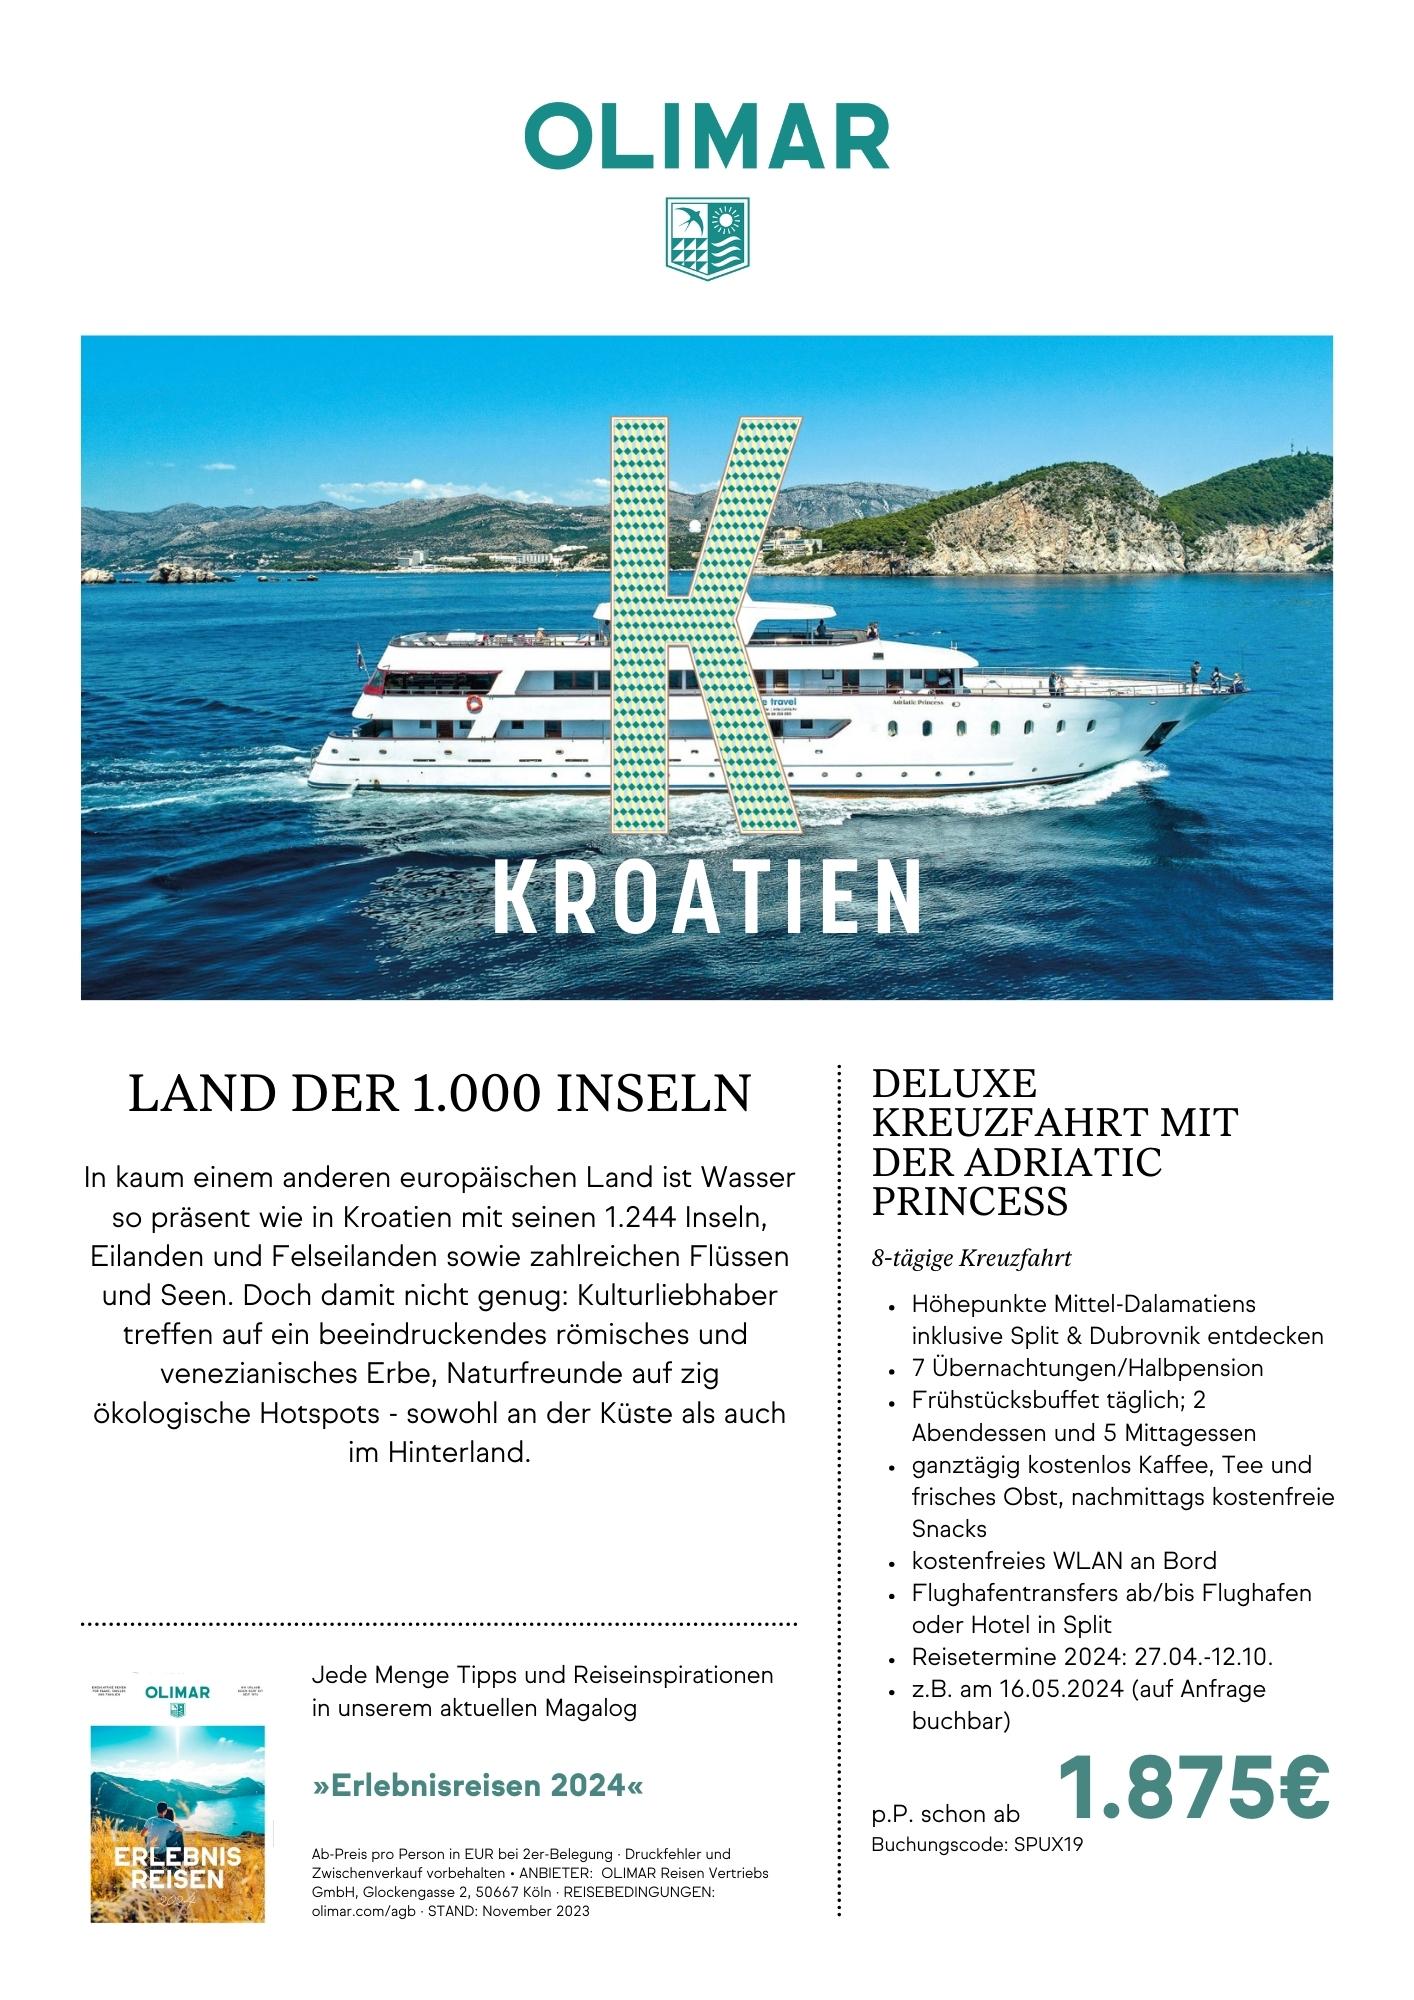 Olimar - Kroatien: Deluxe Kreuzfahrt mit der Adriatic Princess